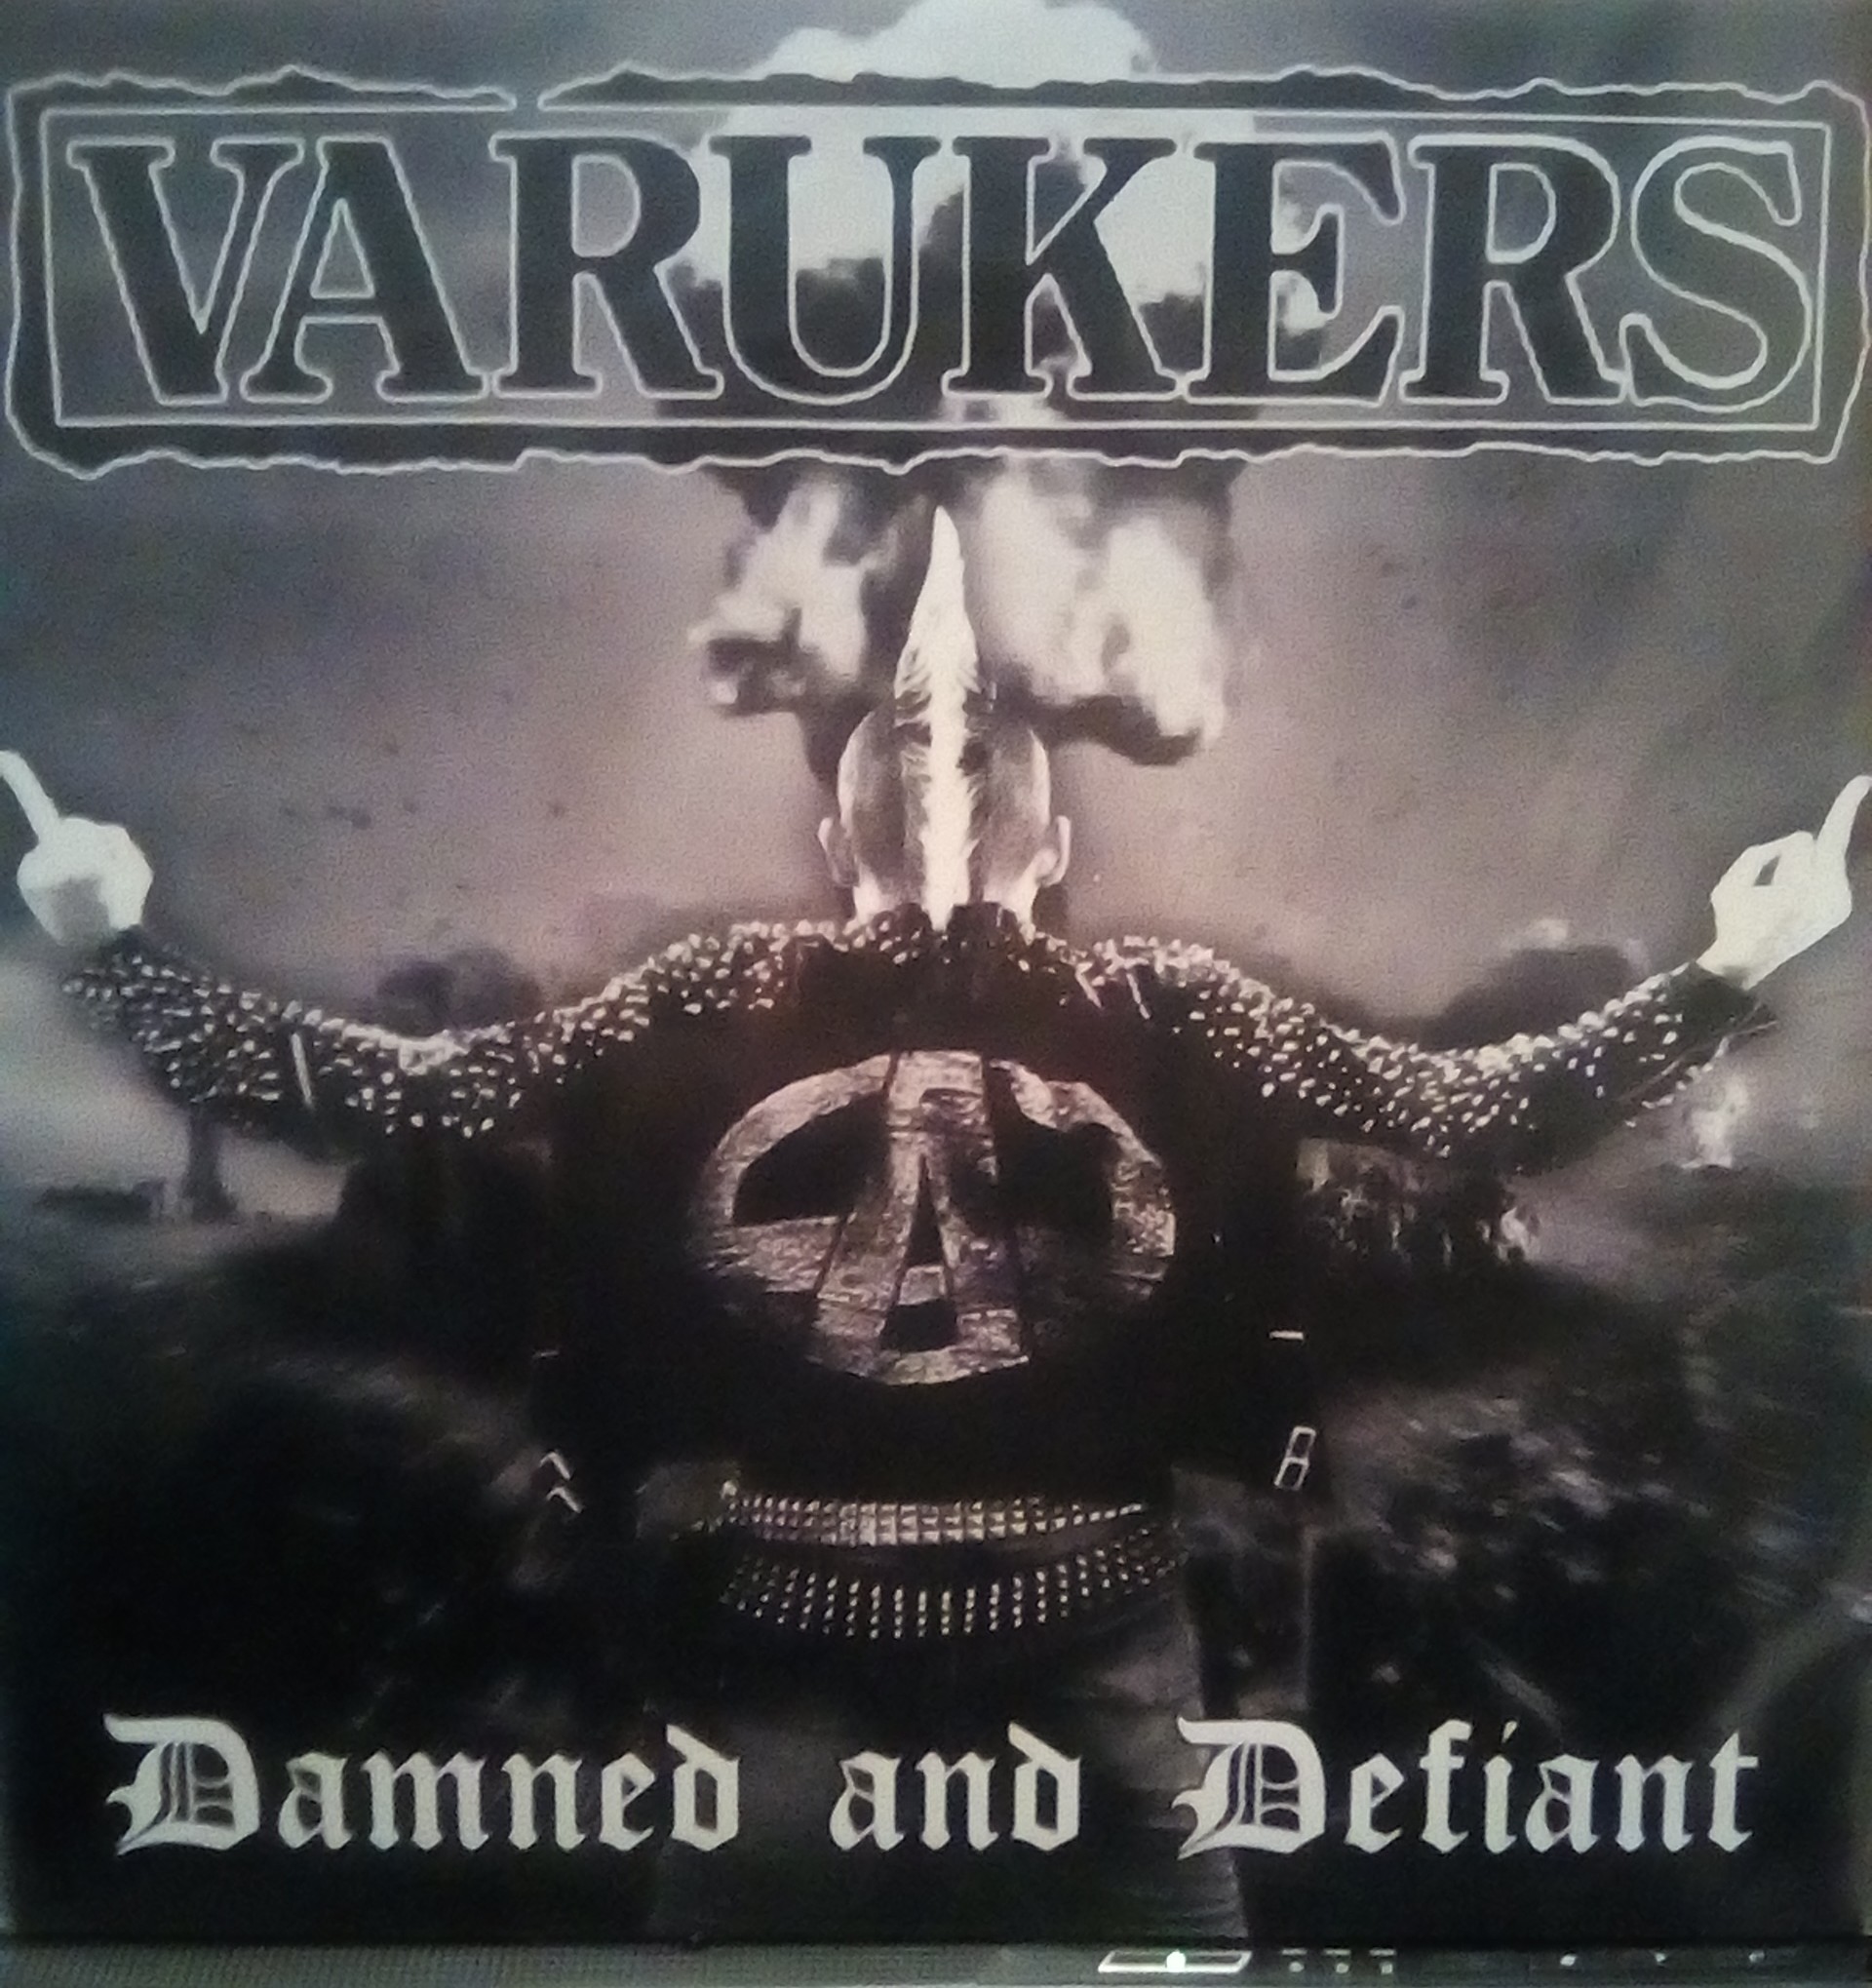 LP The Varukers Image